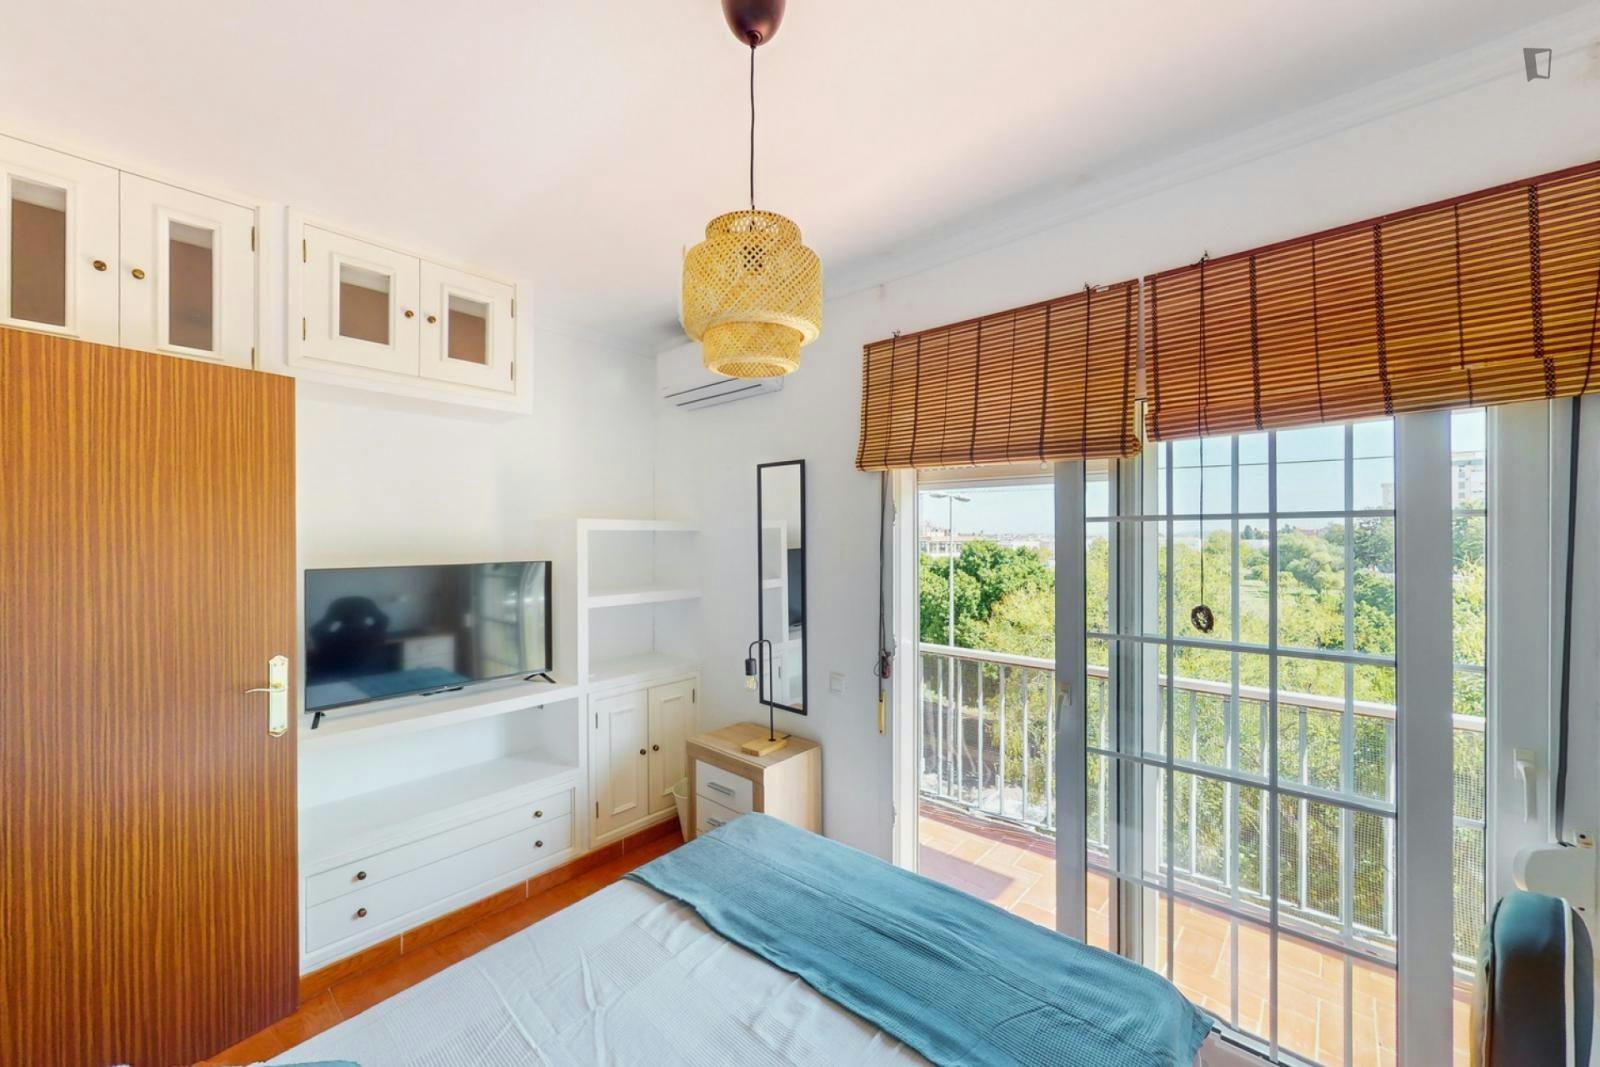 Appealing single bedroom with balcony